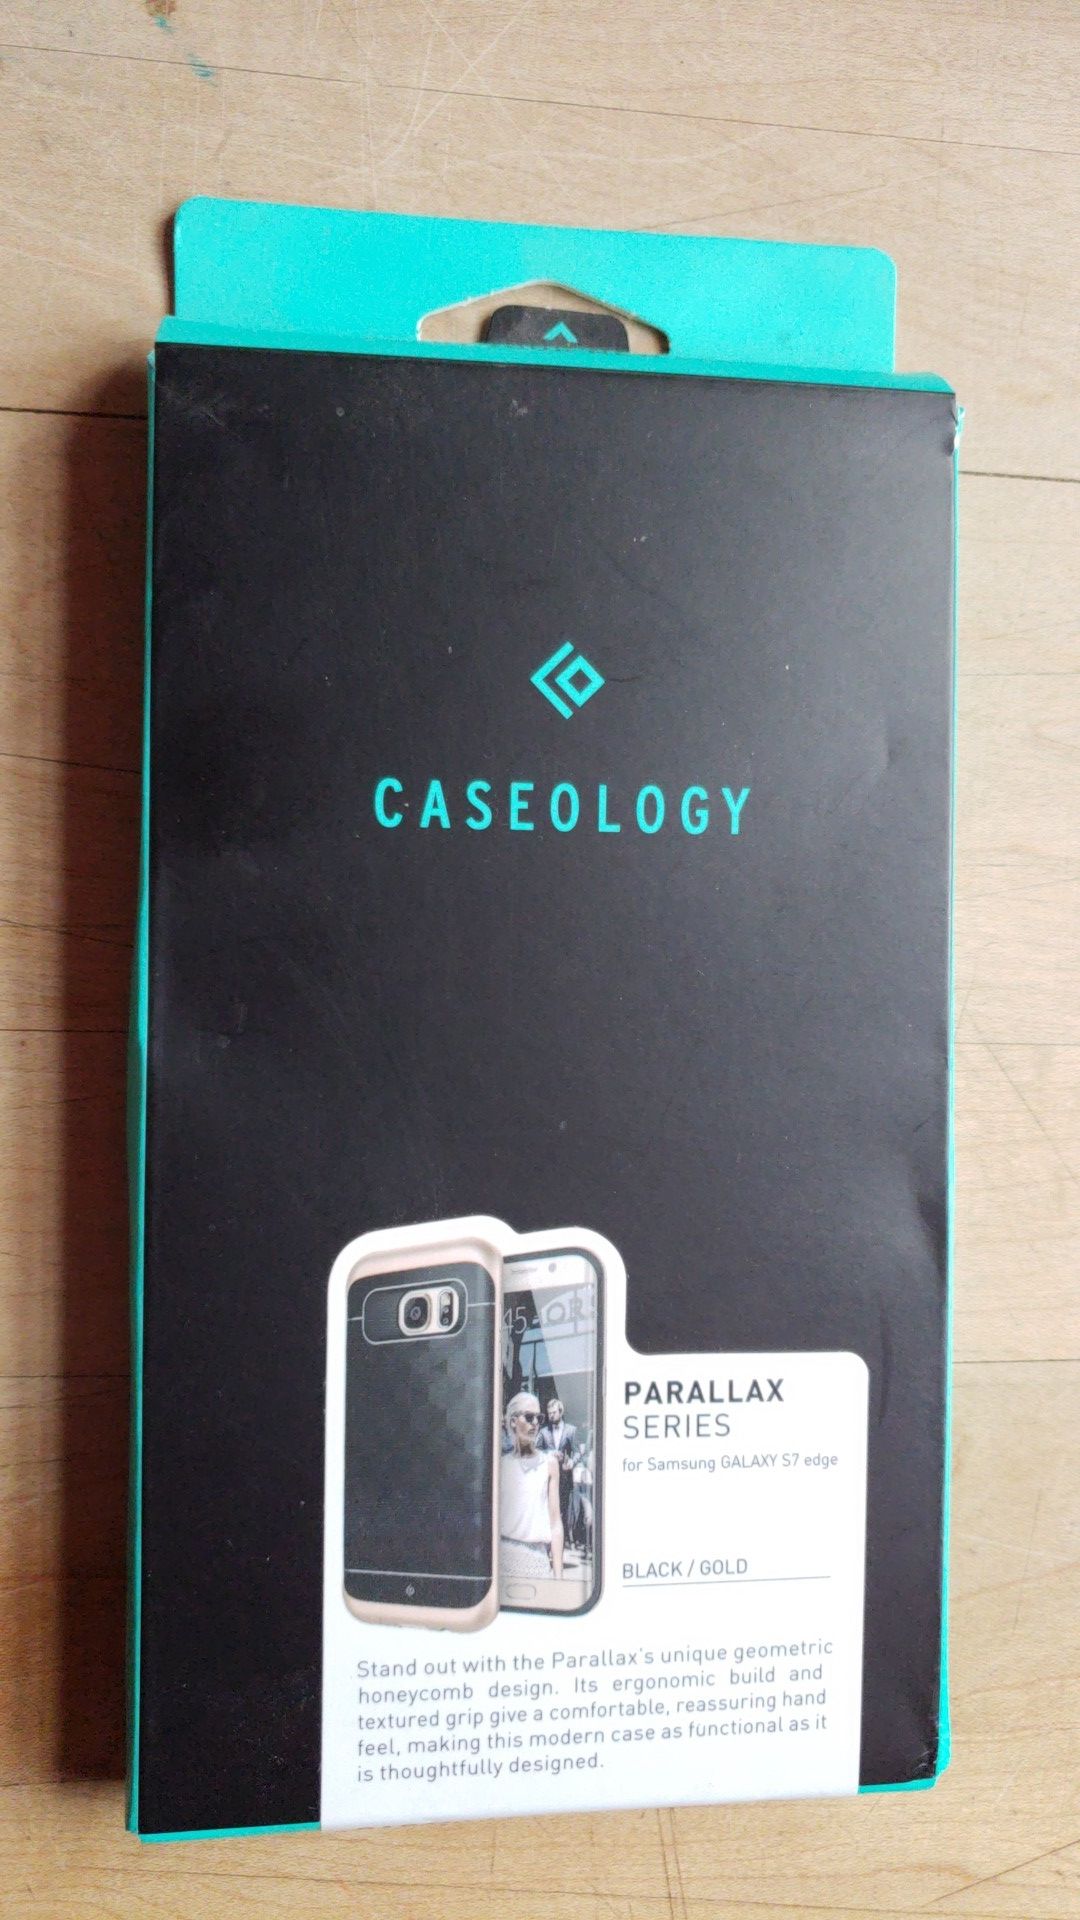 CASEOLOGY Parallax Series for Samsung GALAXY S7 Edge